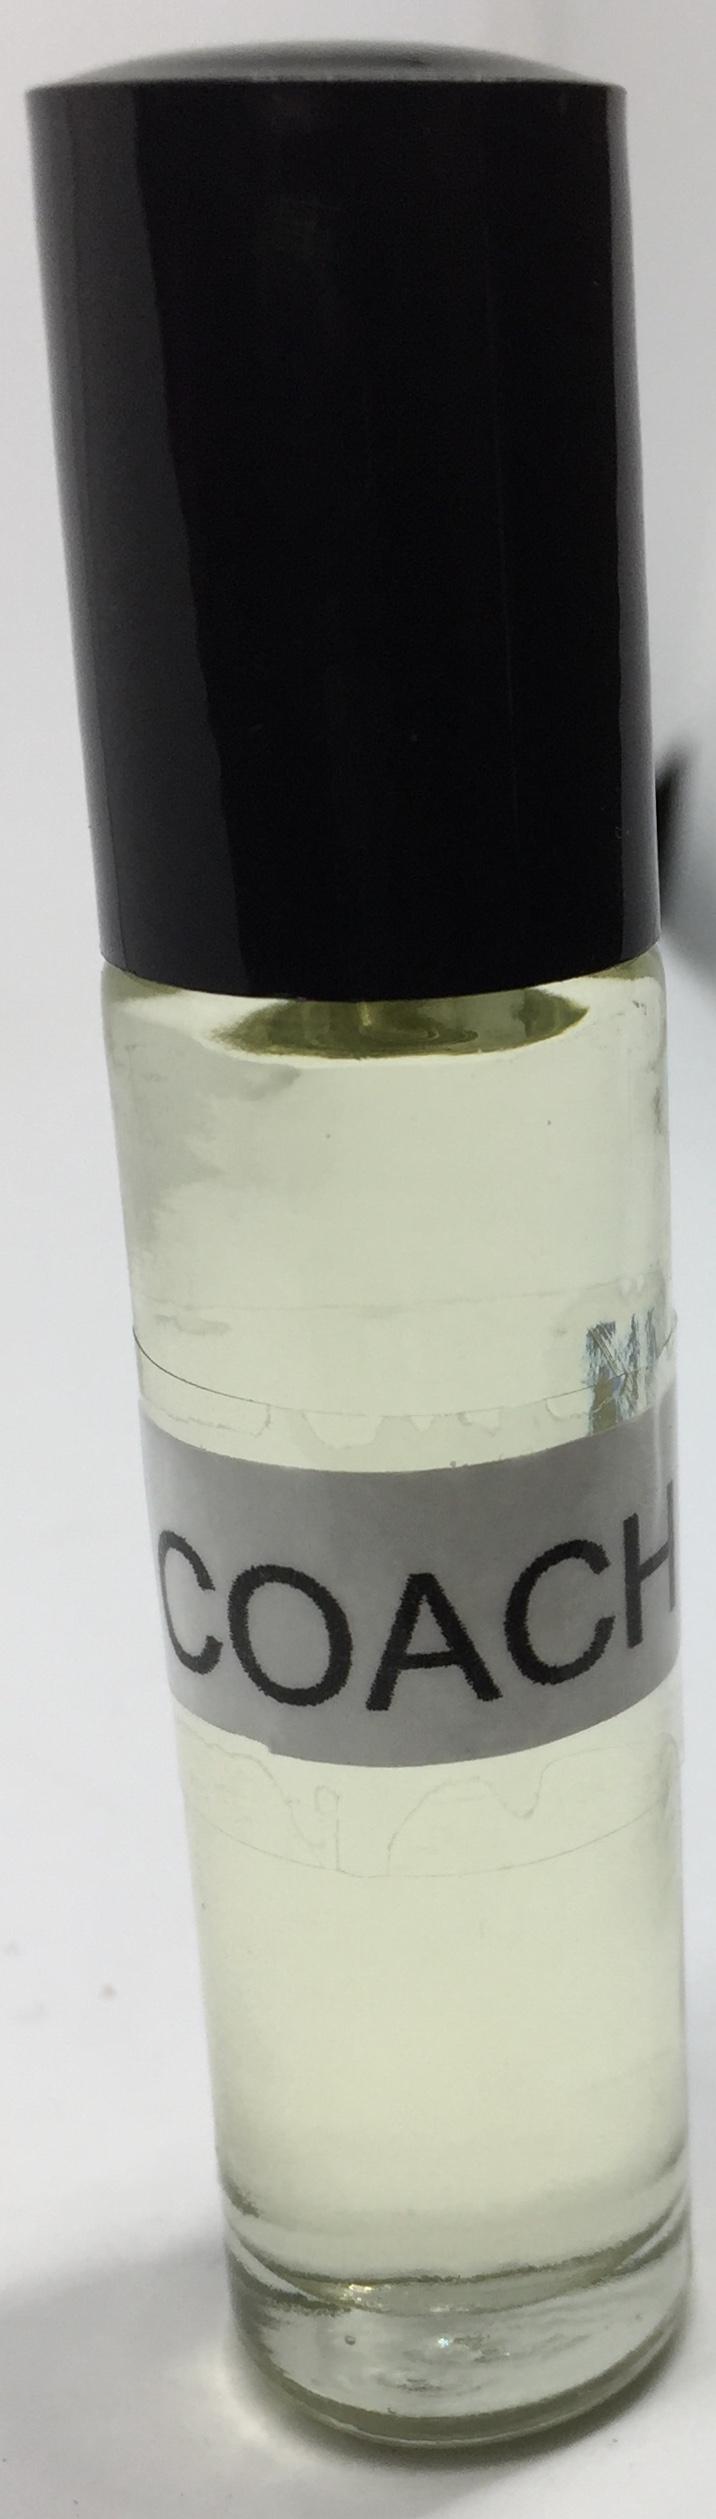 Coach: Fragrance(Perfume)Body Oil Men